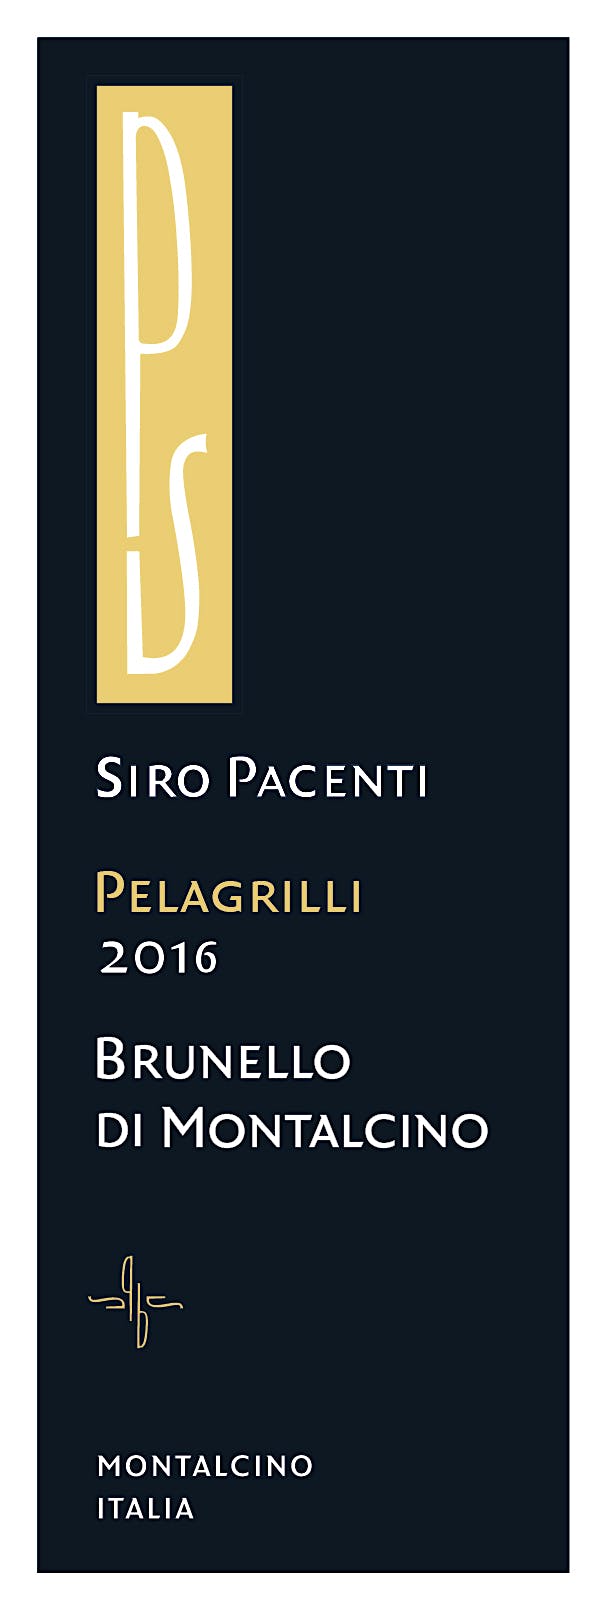 Label for Siro Pacenti